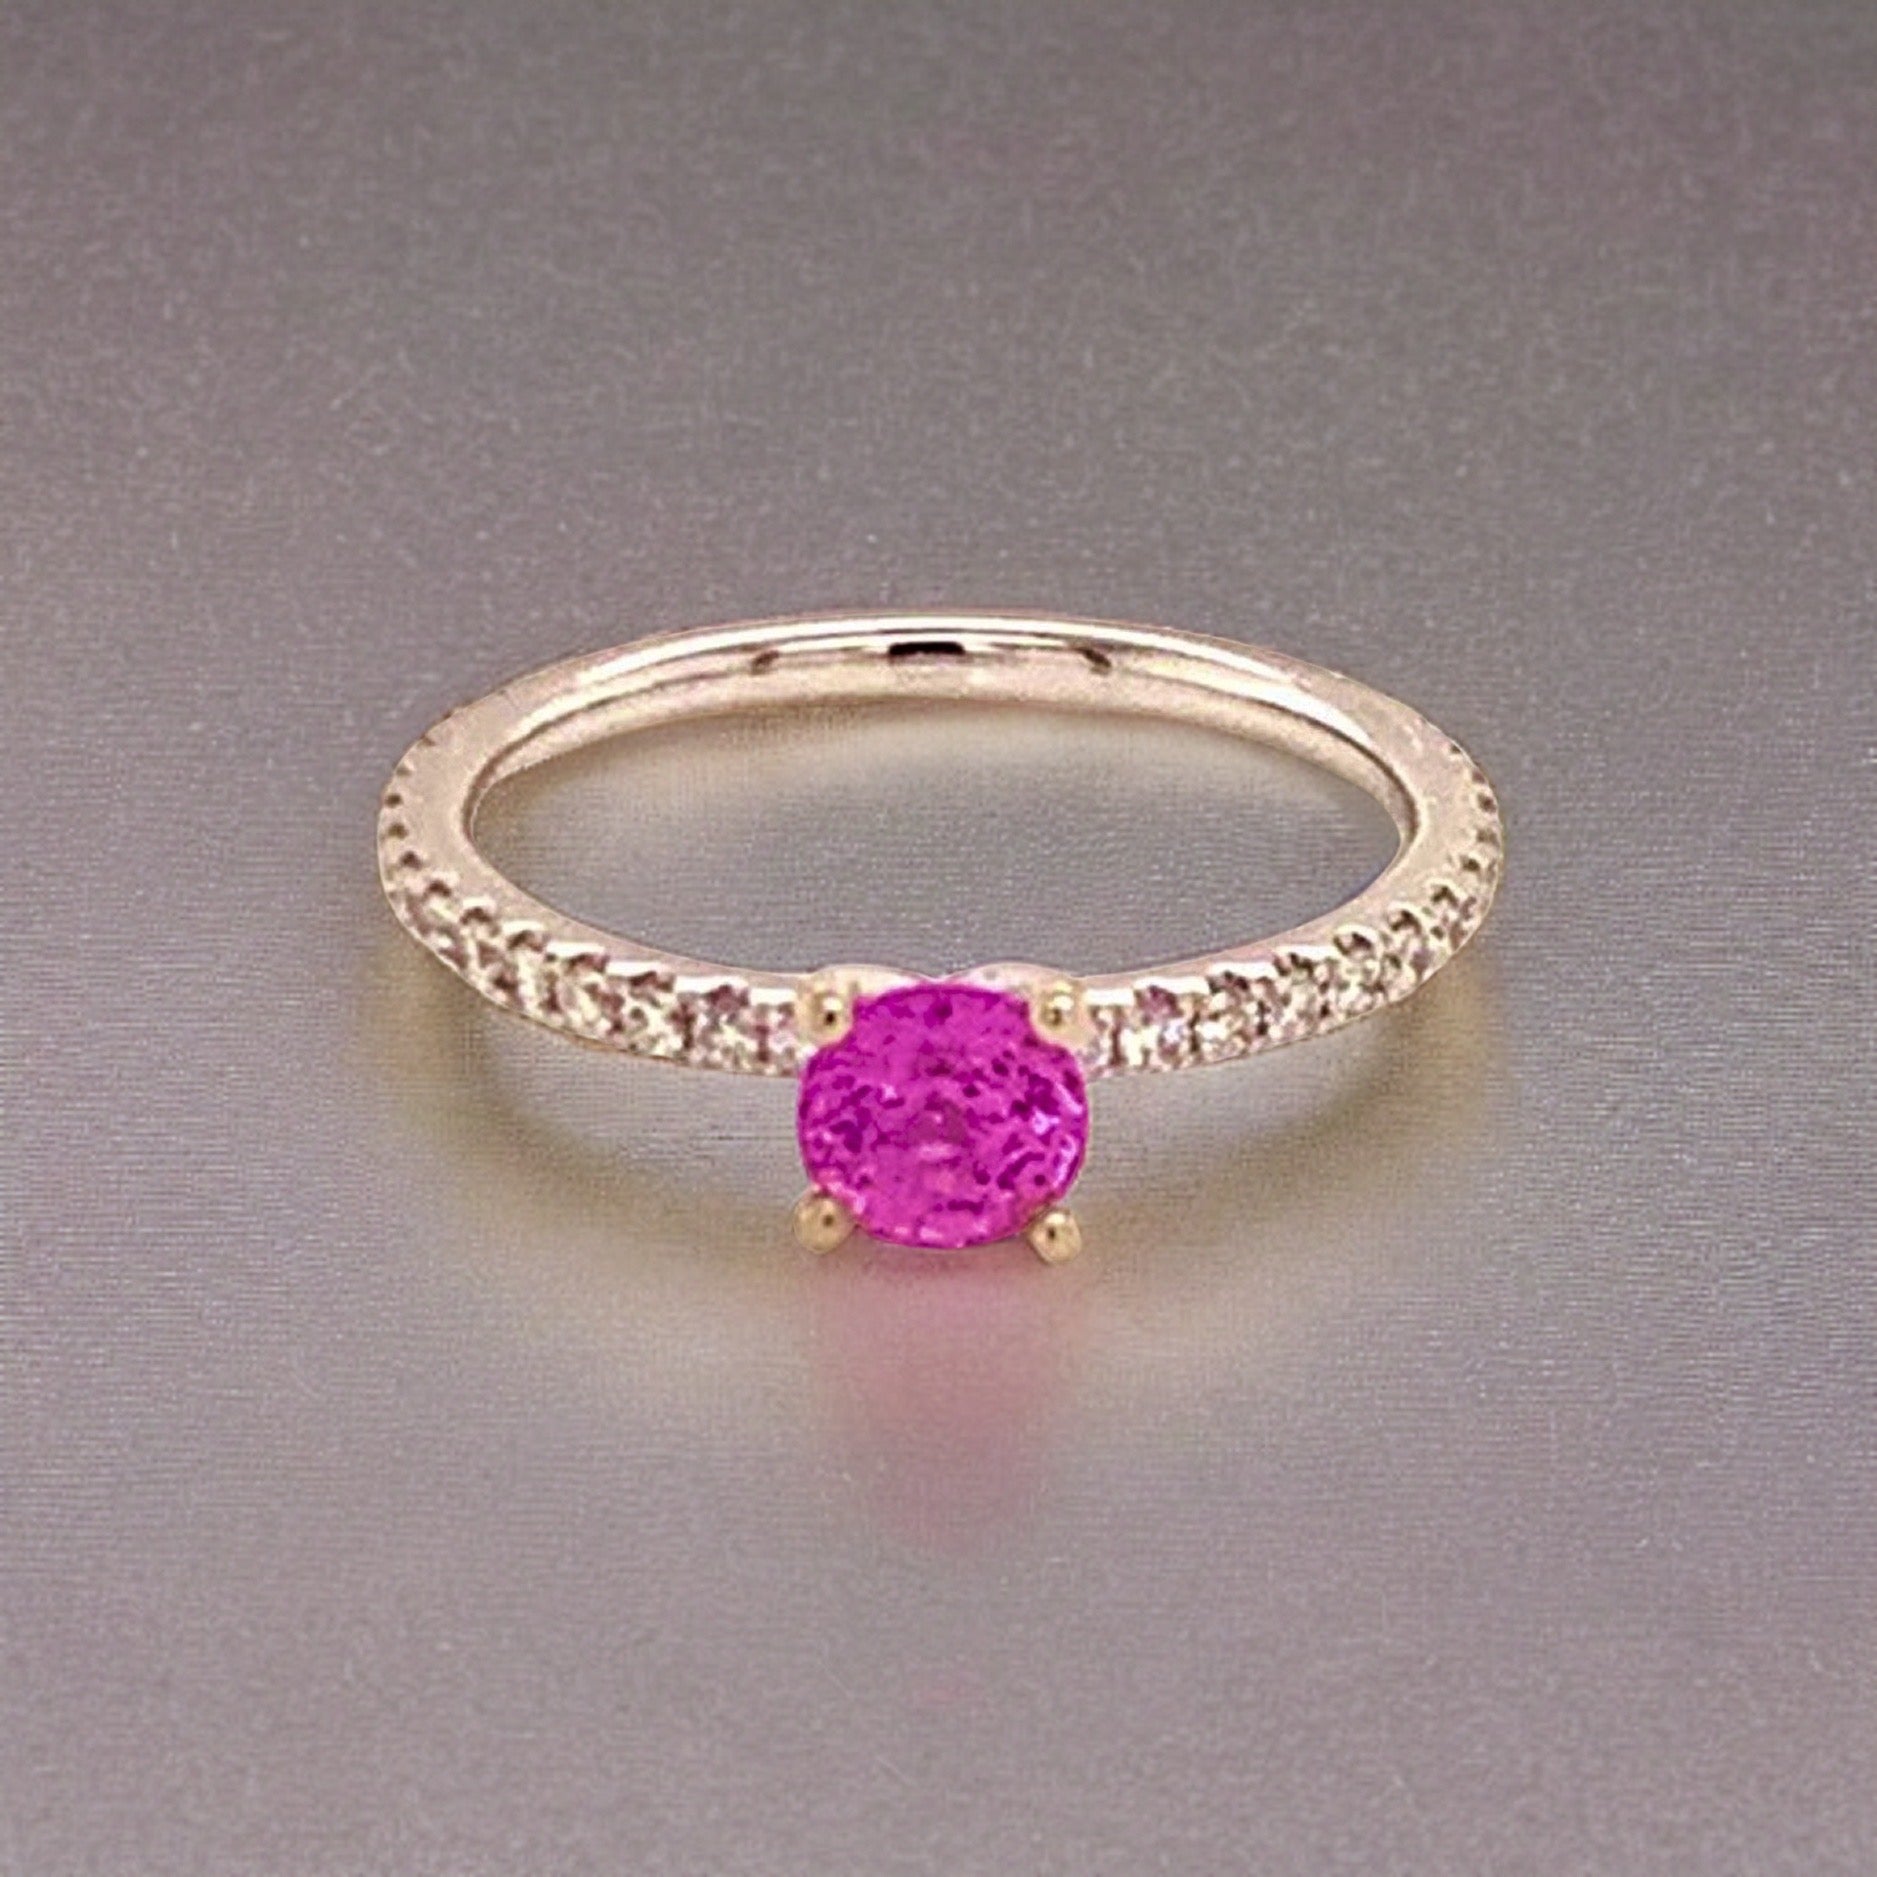 Diamond Tourmaline Rubellite Ring 6.5 18k Gold 1.04 TCW Certified $1,550 821768 - Certified Fine Jewelry